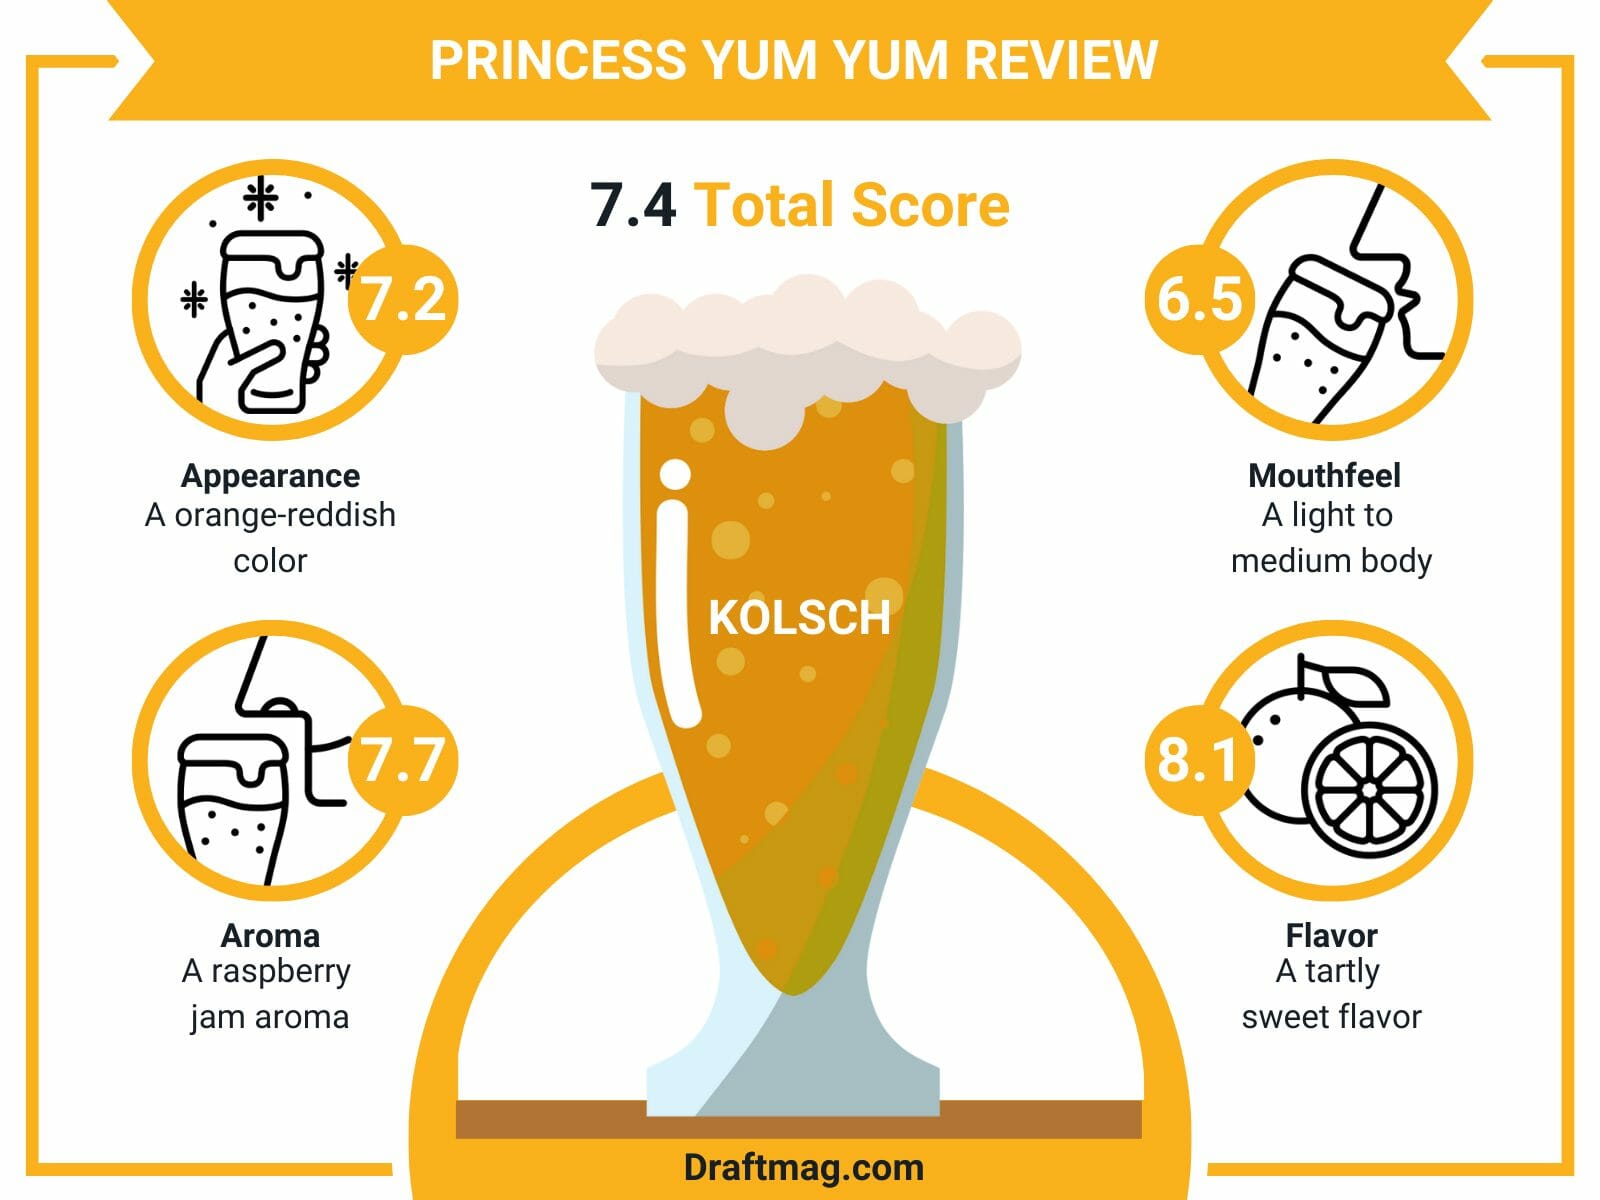 Princess yum yum review inforgraphic